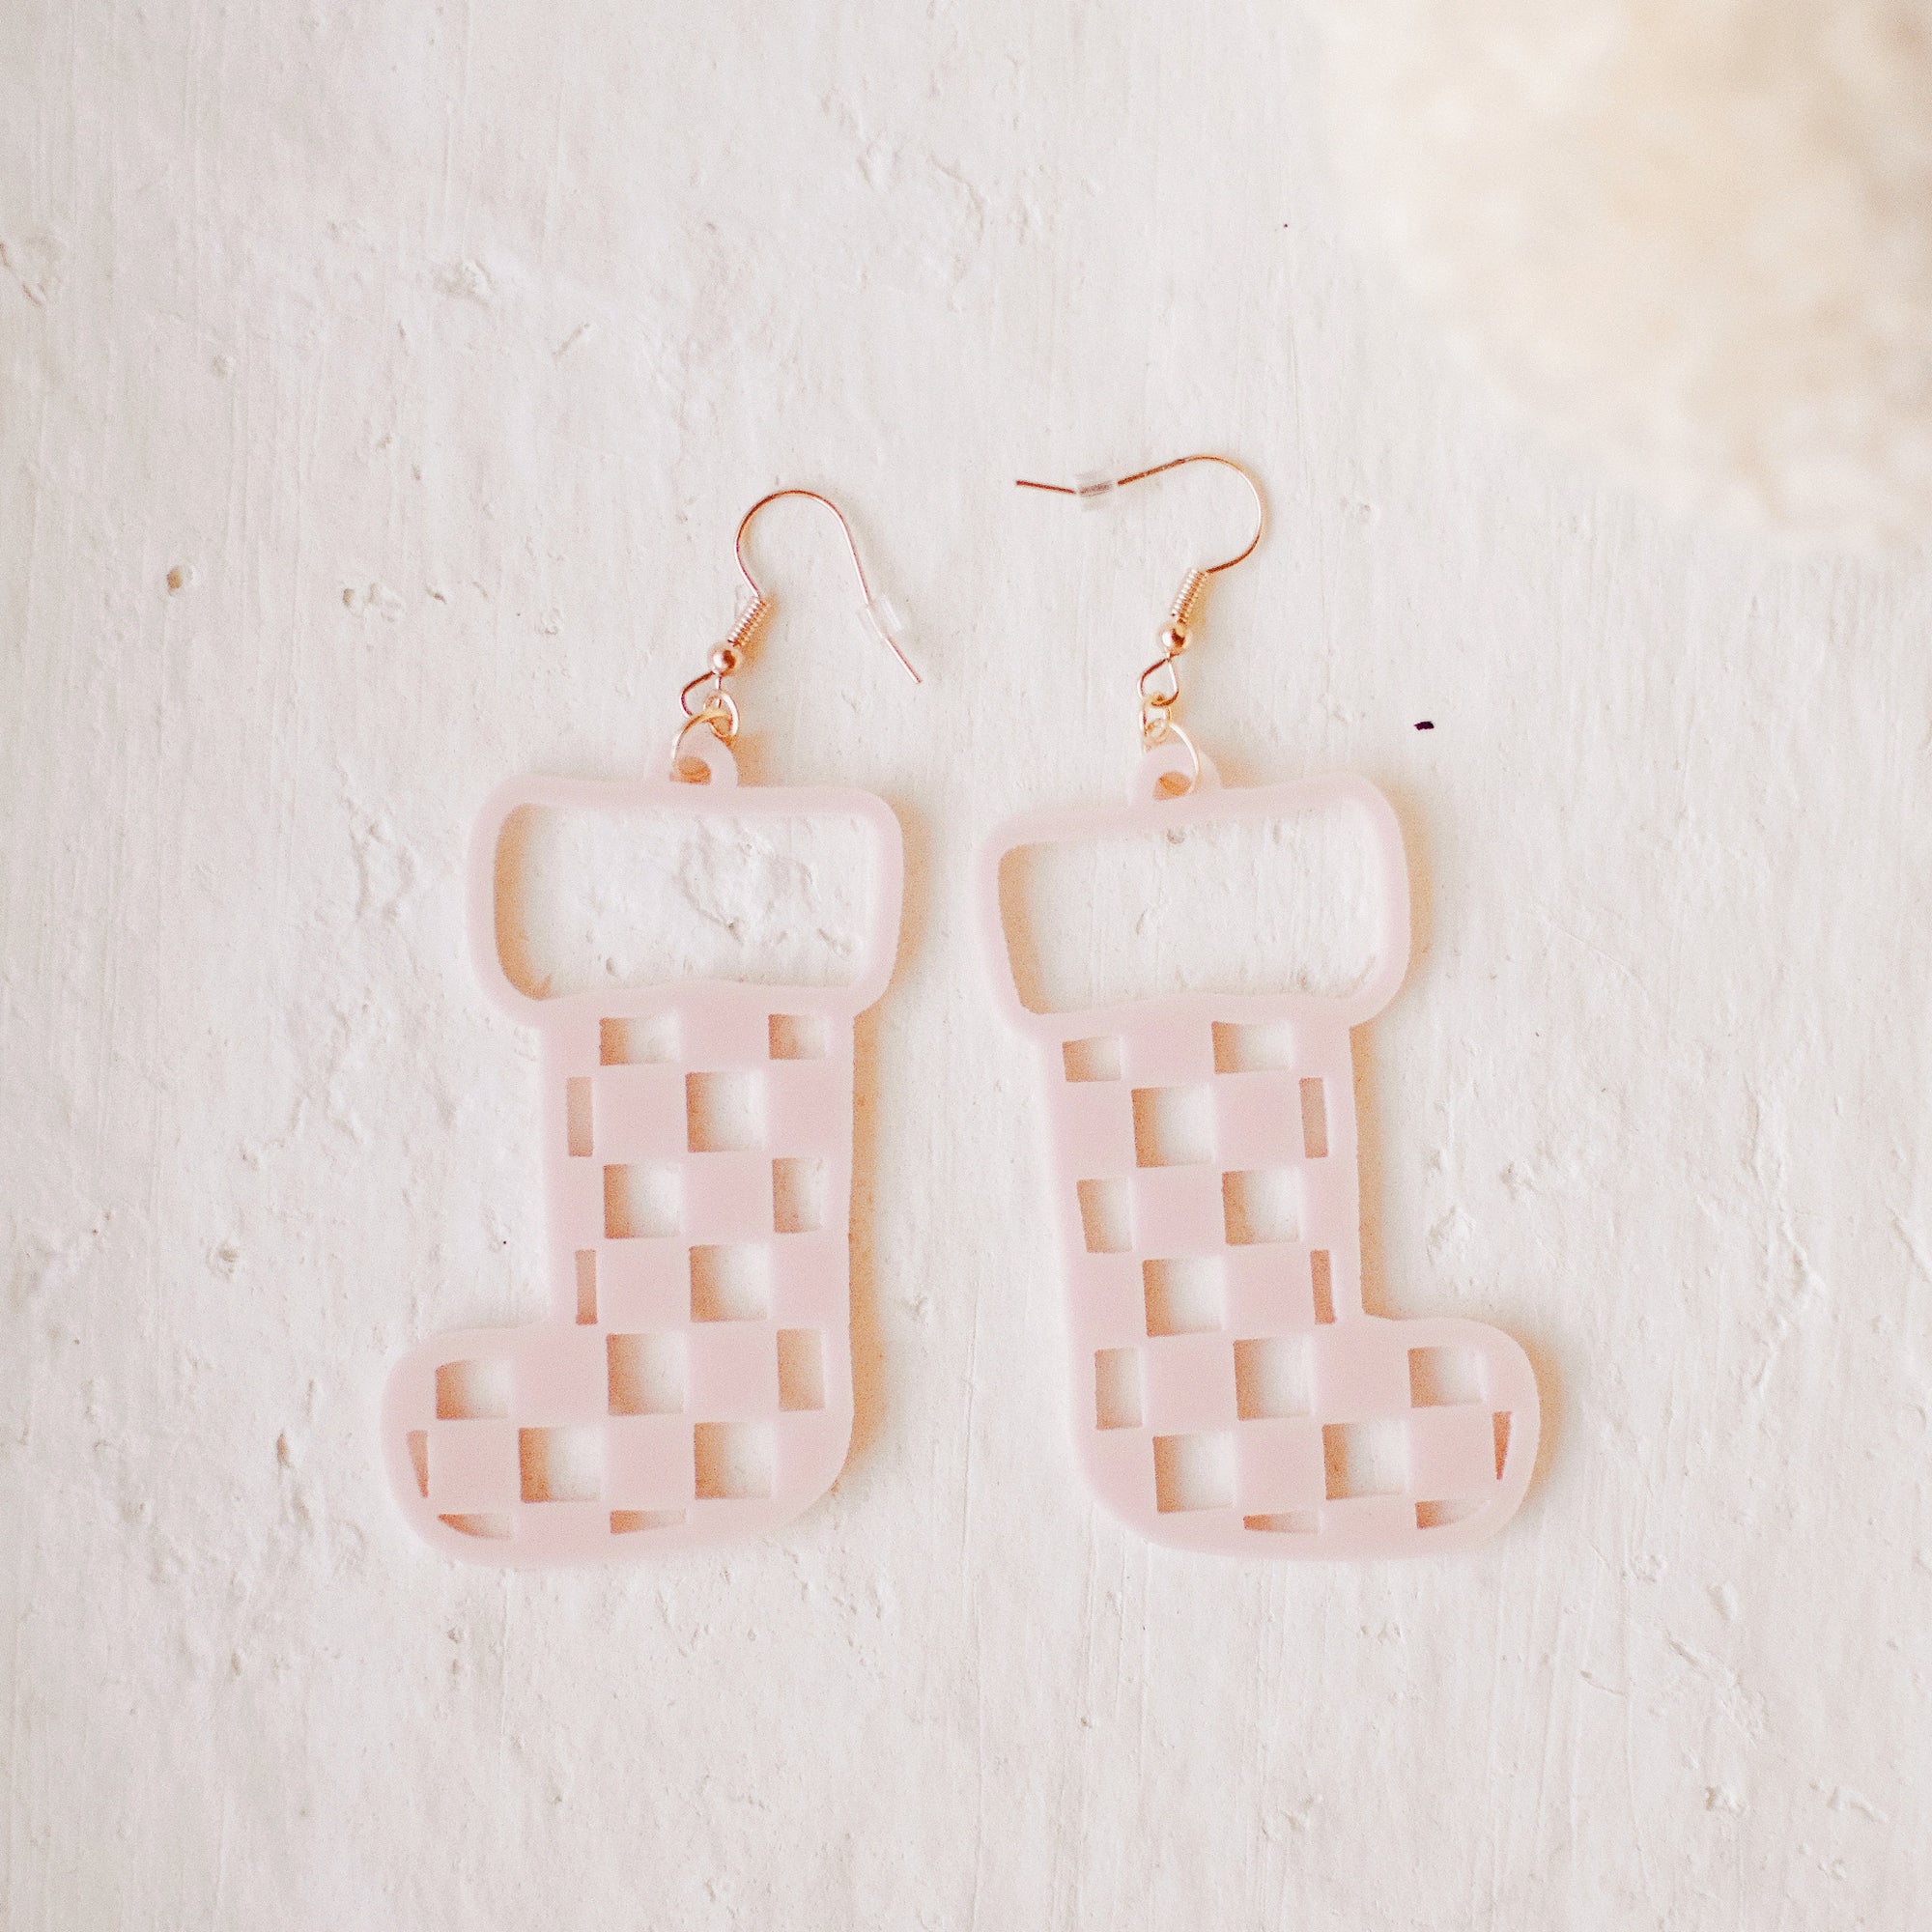 Earrings - Christmas - Pink Checkered Stocking Dangles